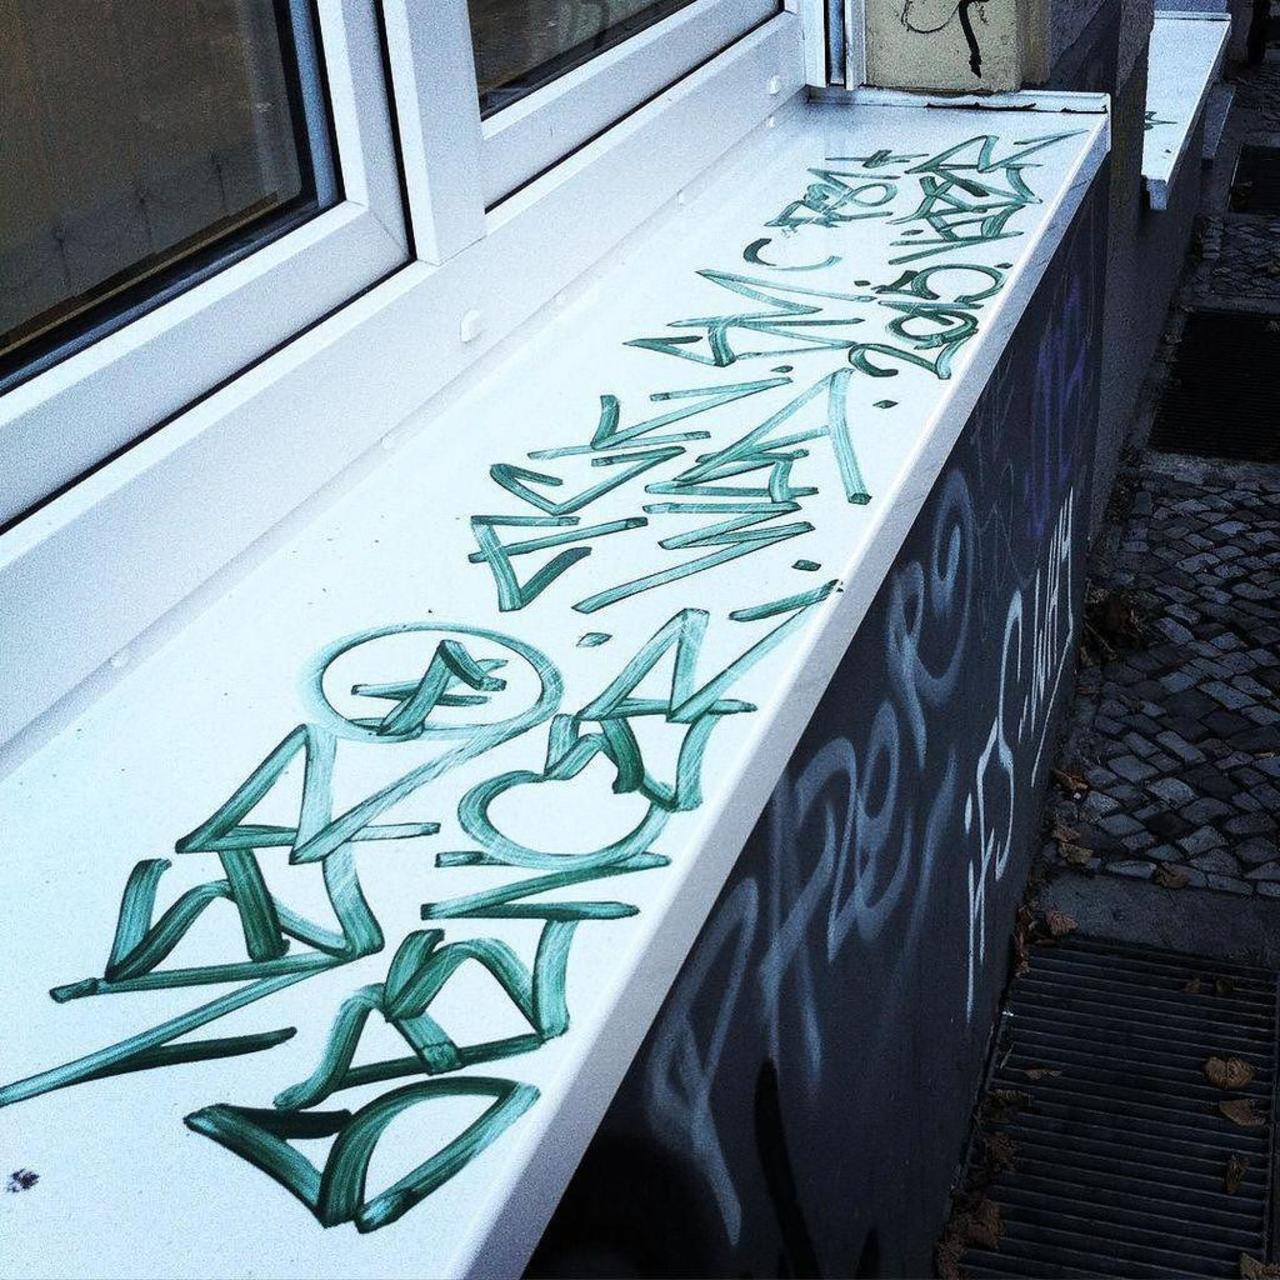 RT @artpushr: via #berlintags "http://ift.tt/1LNflNn" #graffiti #streetart http://t.co/VdsHUCtNQI